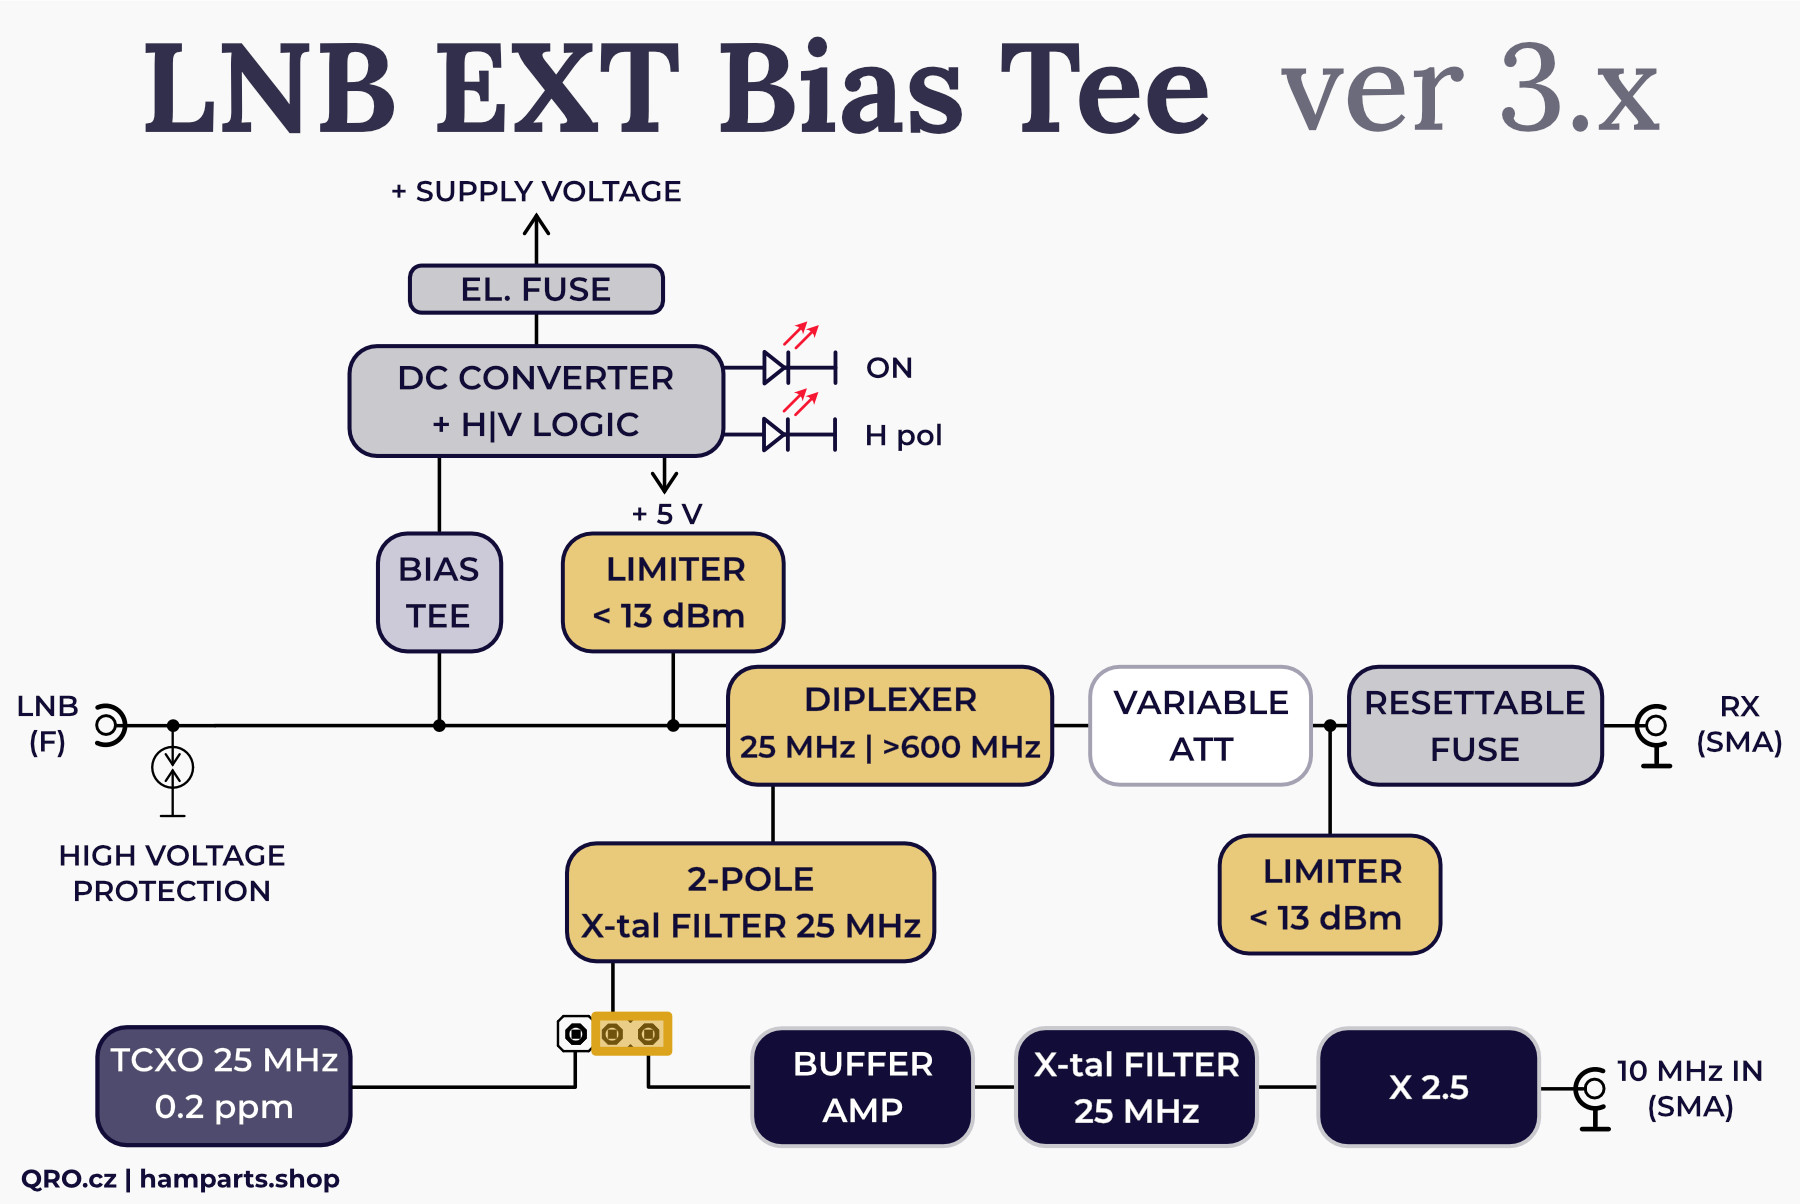 LNB bias tee block diagram mk3 version by qro.cz hamparts.shop